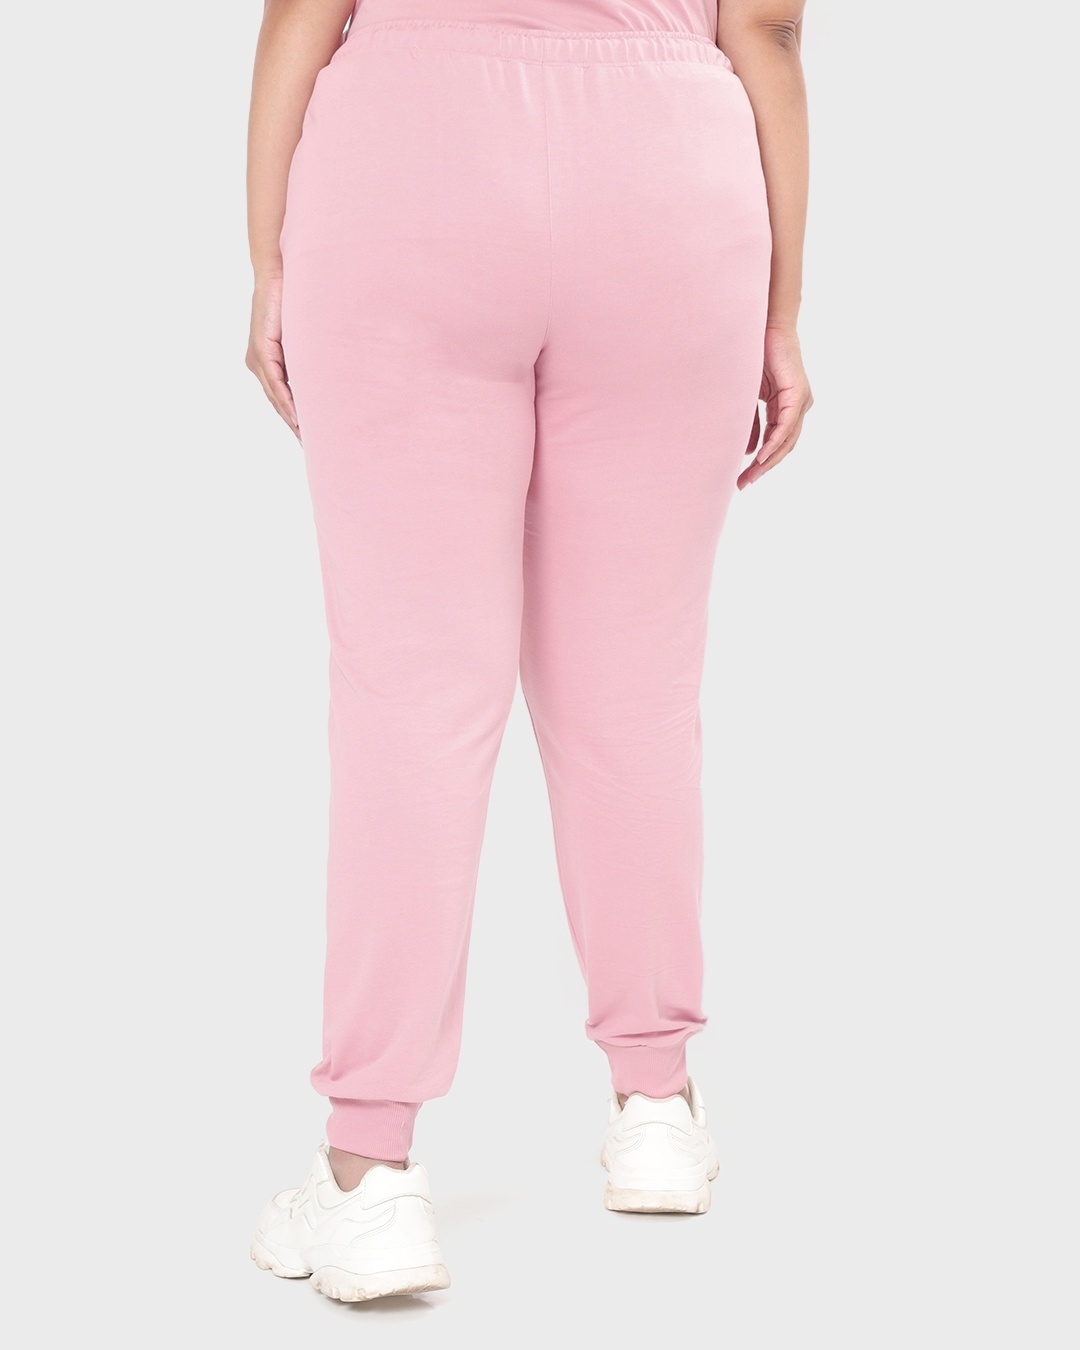 Shop Women's Cheeky Pink Plus Size Joggers-Design